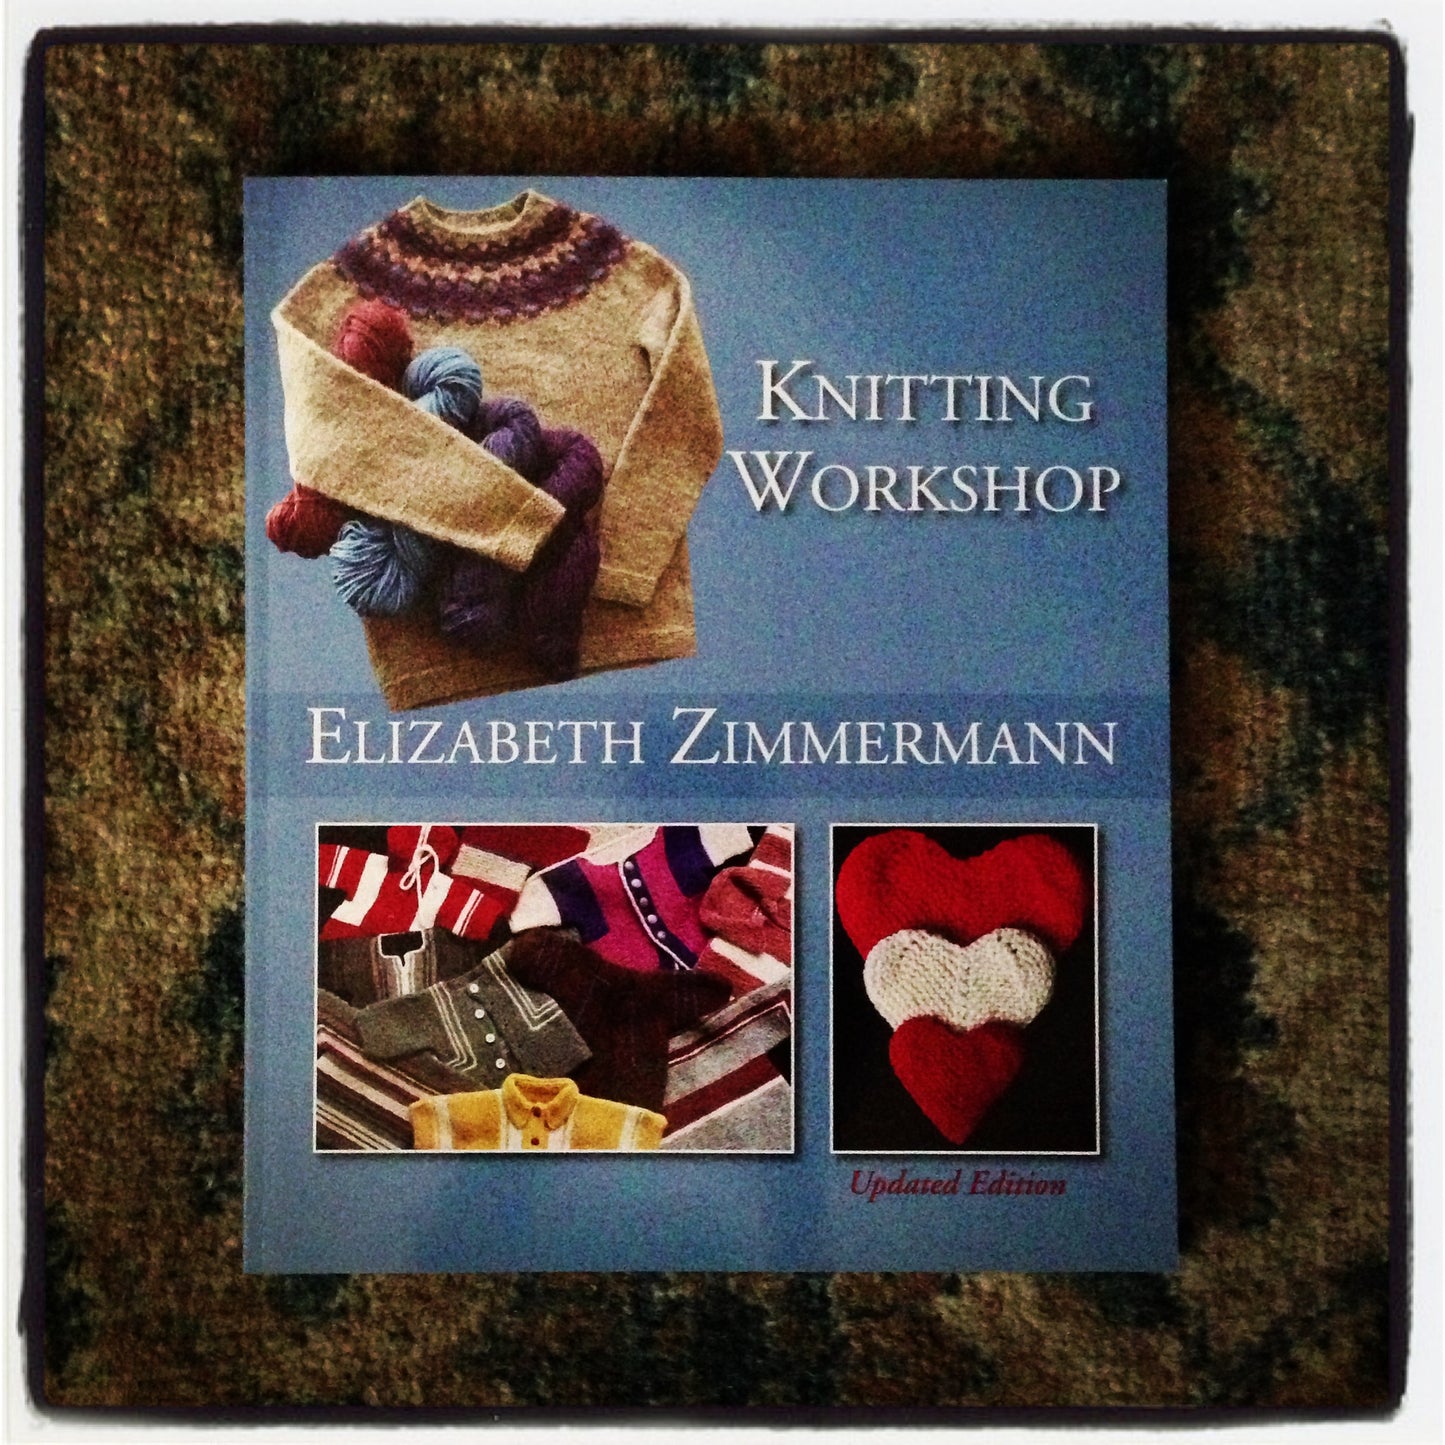 Knitting Workshop by Elizabeth Zimmerman